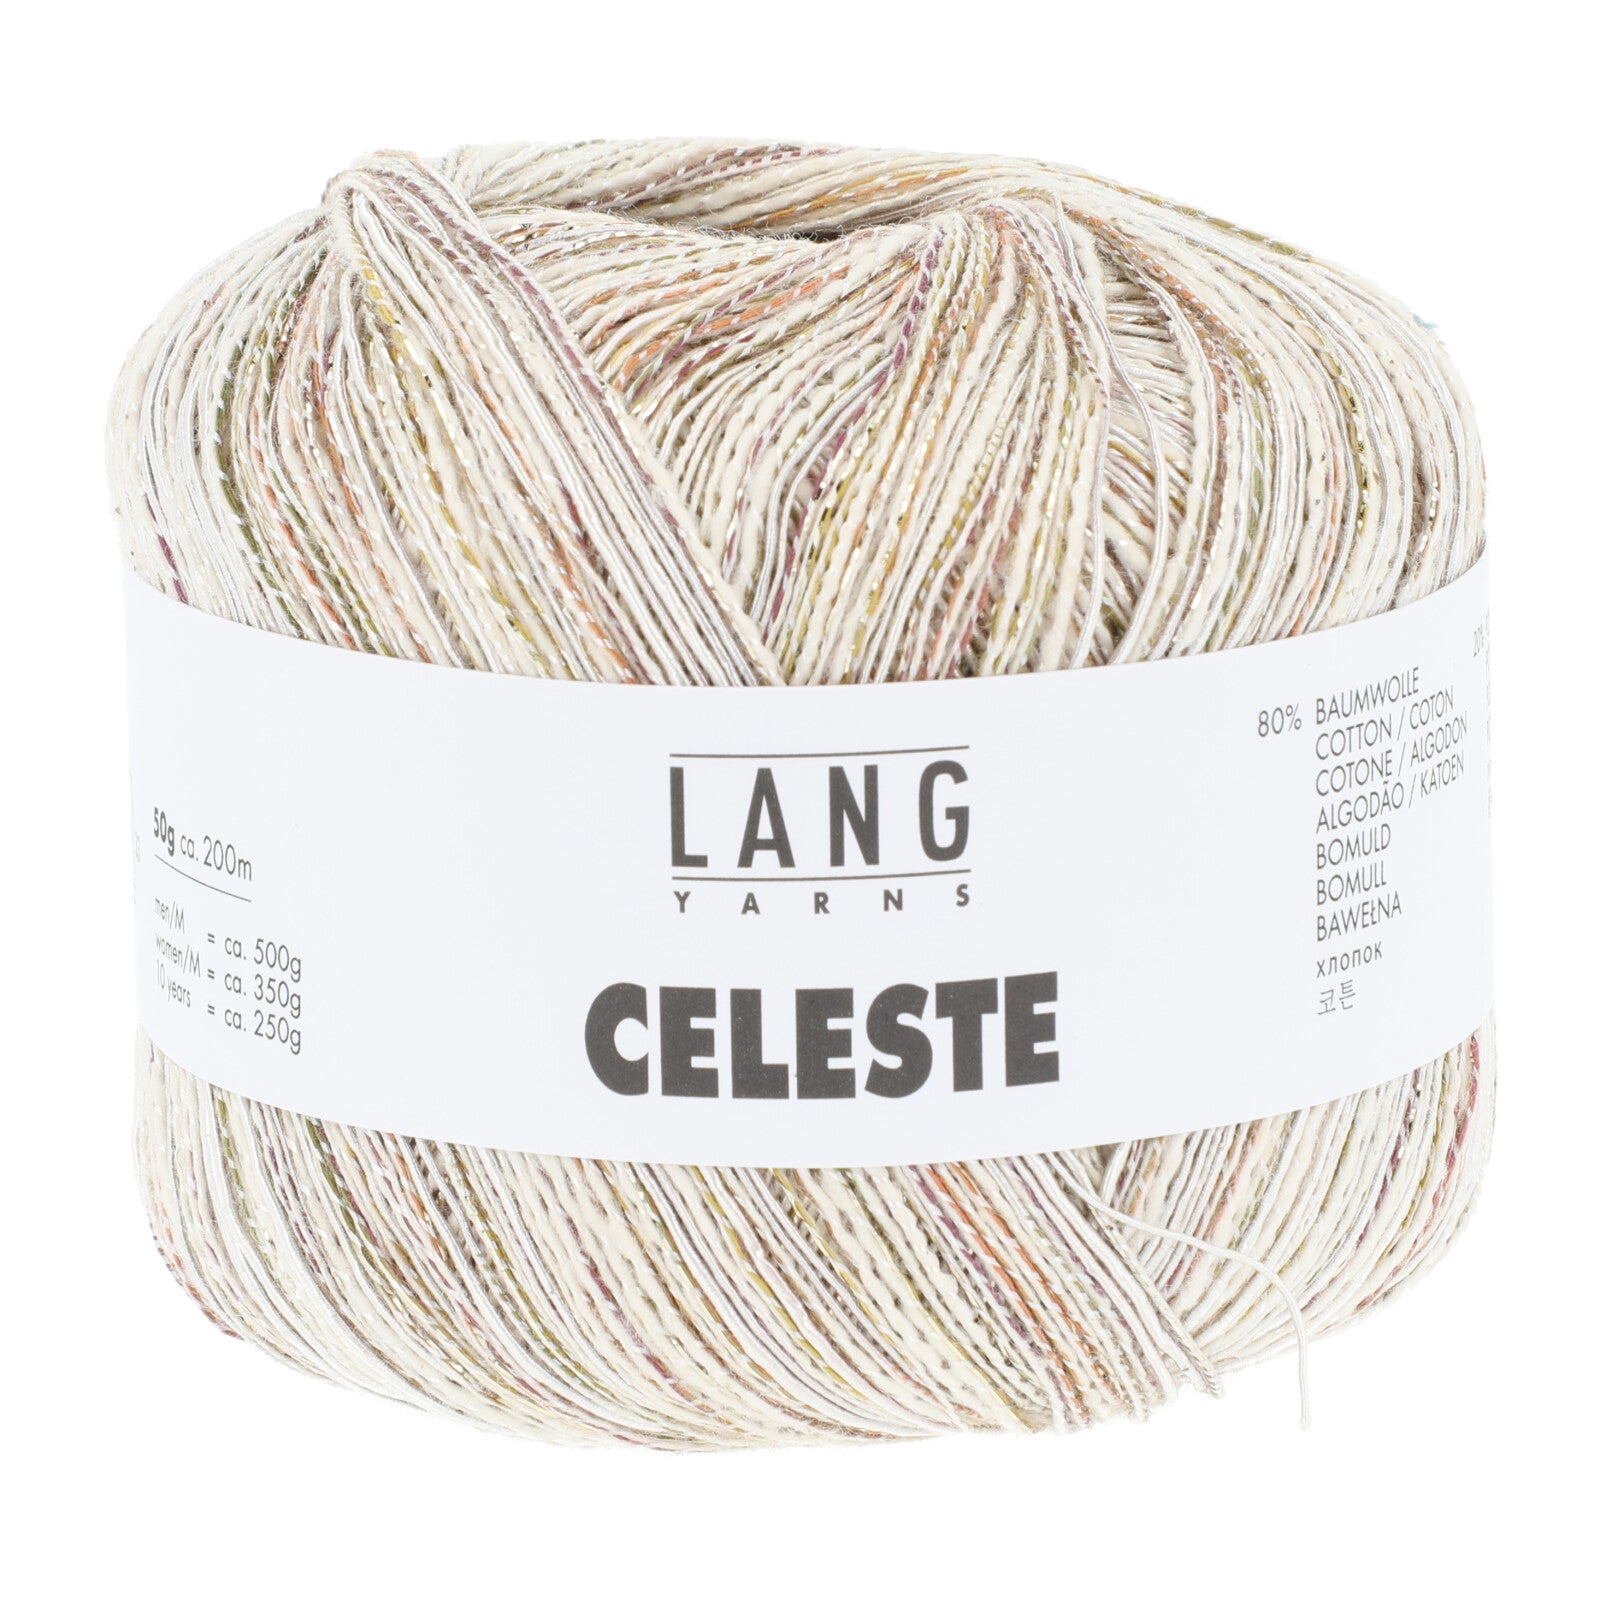 Celeste by LANG yarns